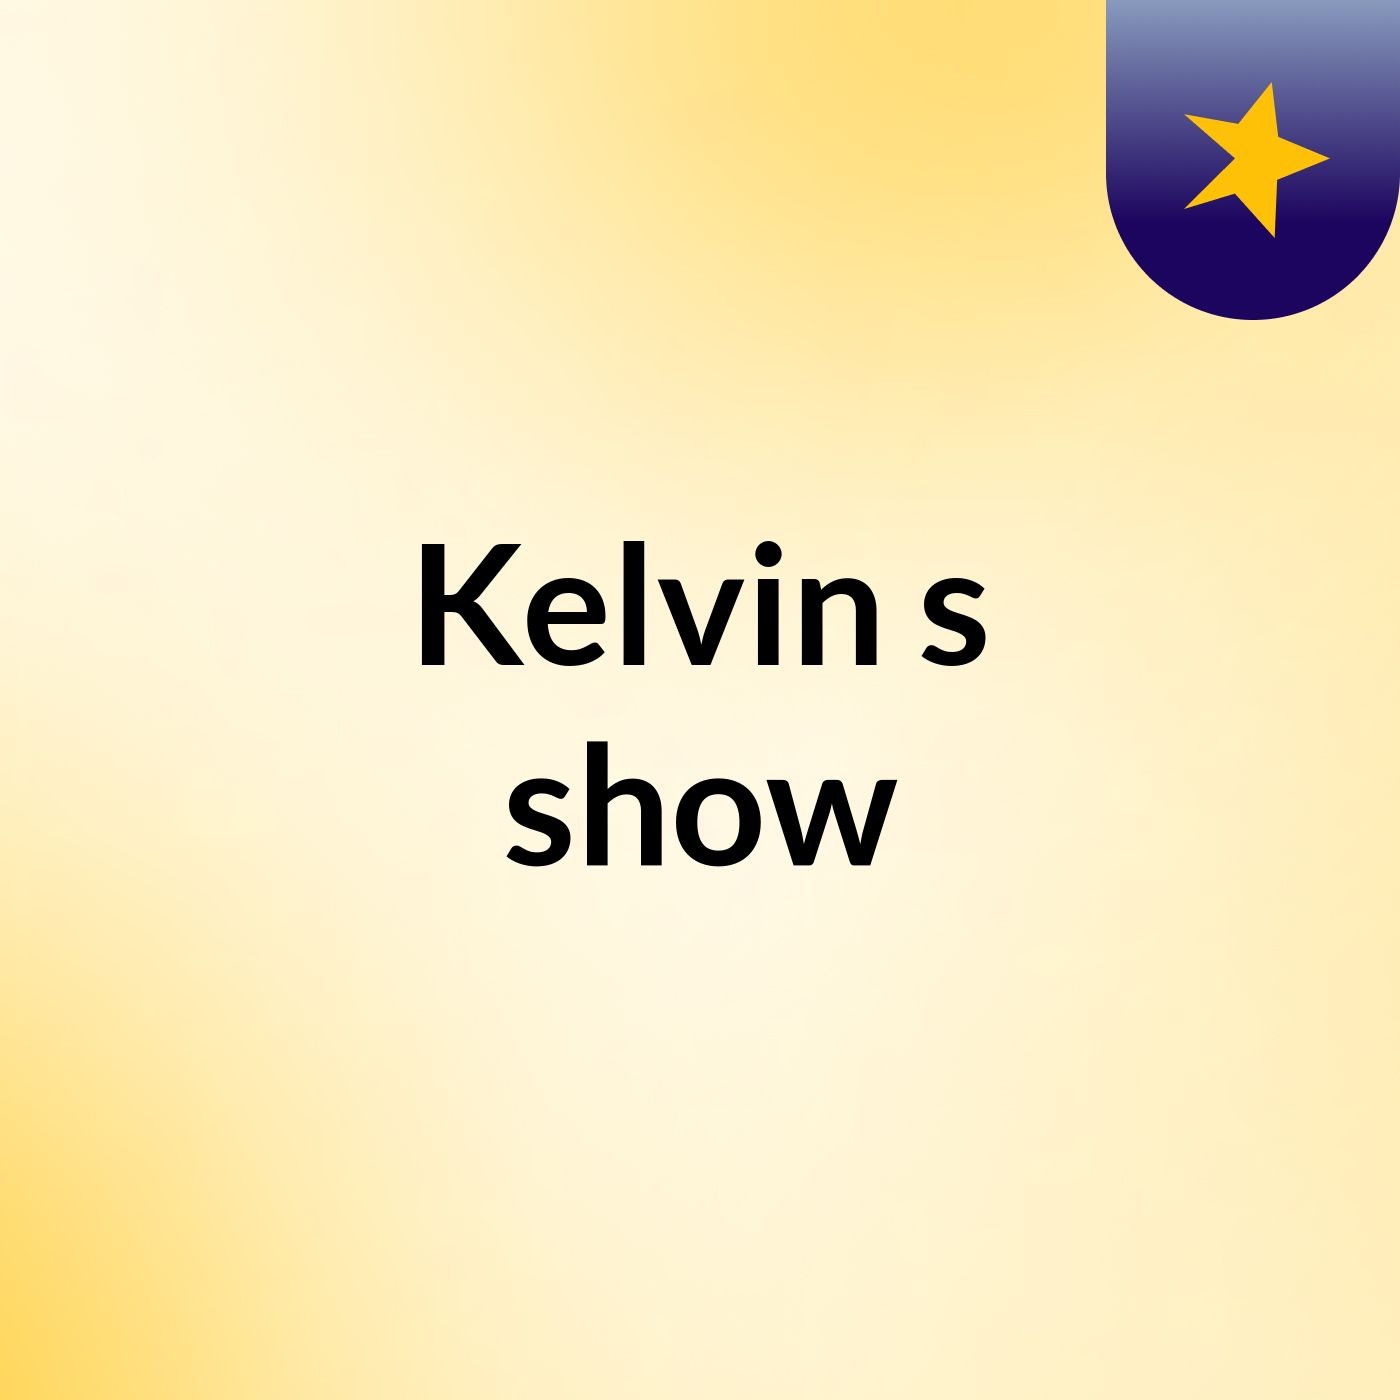 Kelvin's show